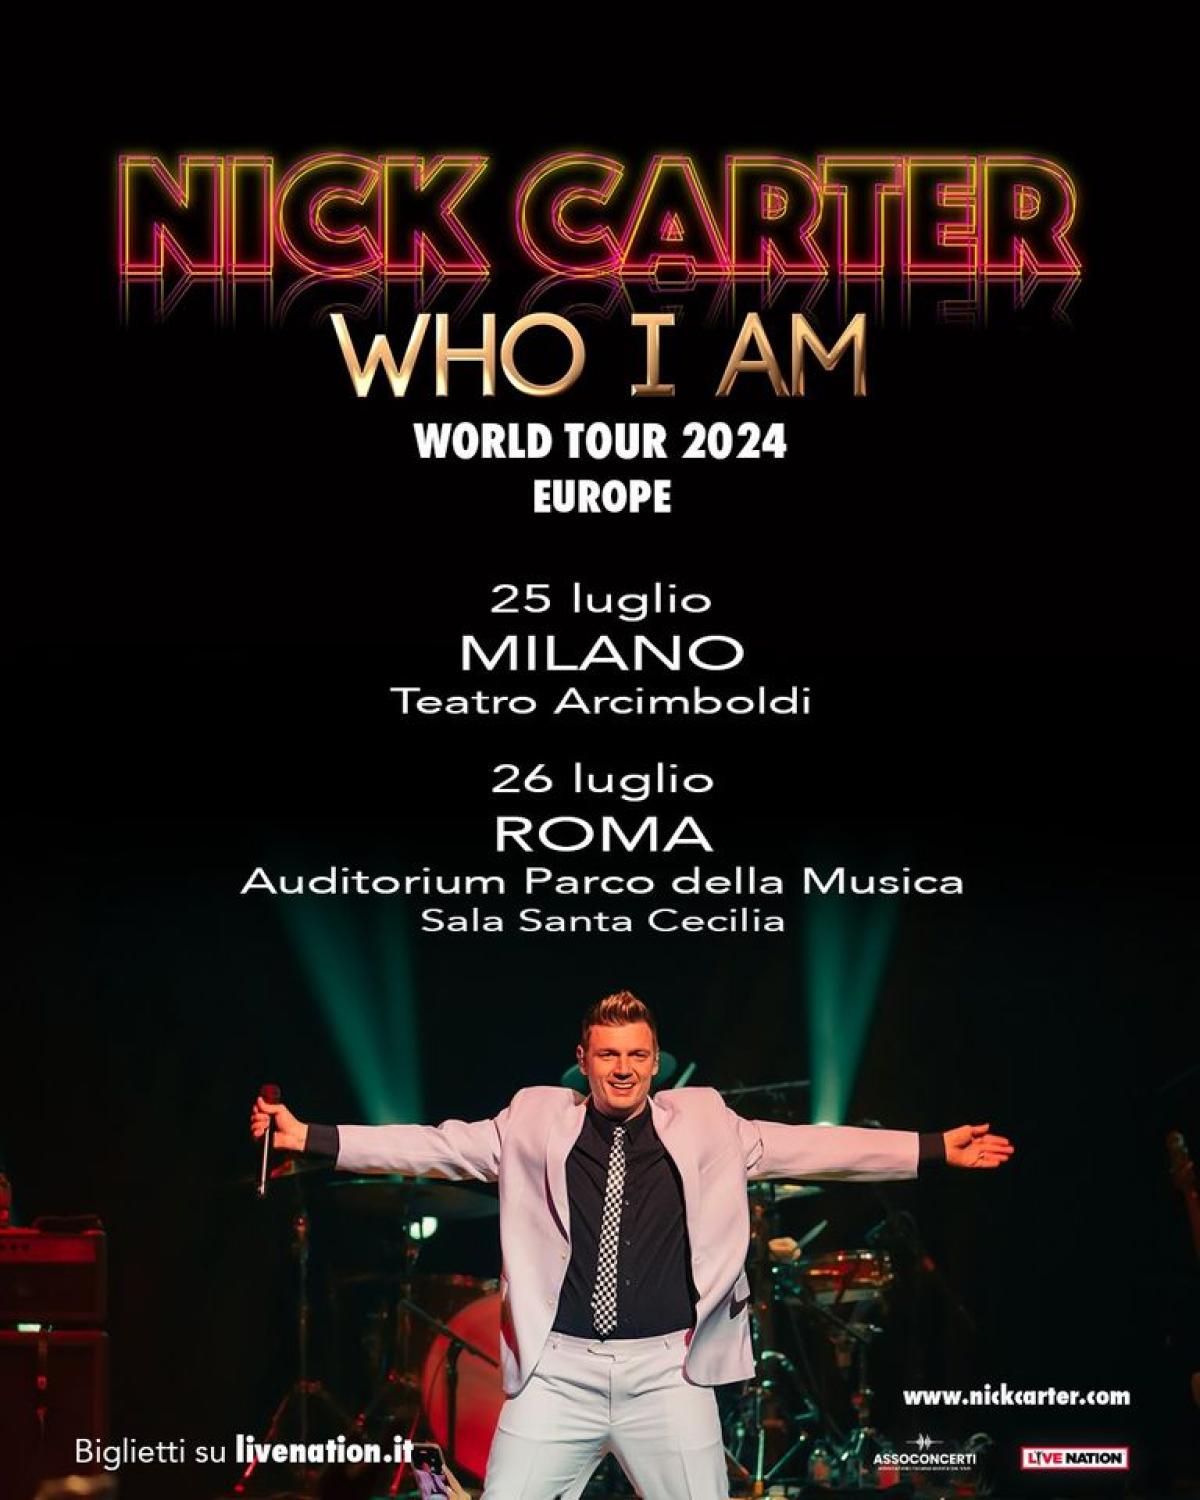 Nick Carter at Cavea Auditorium Parco della Musica Tickets